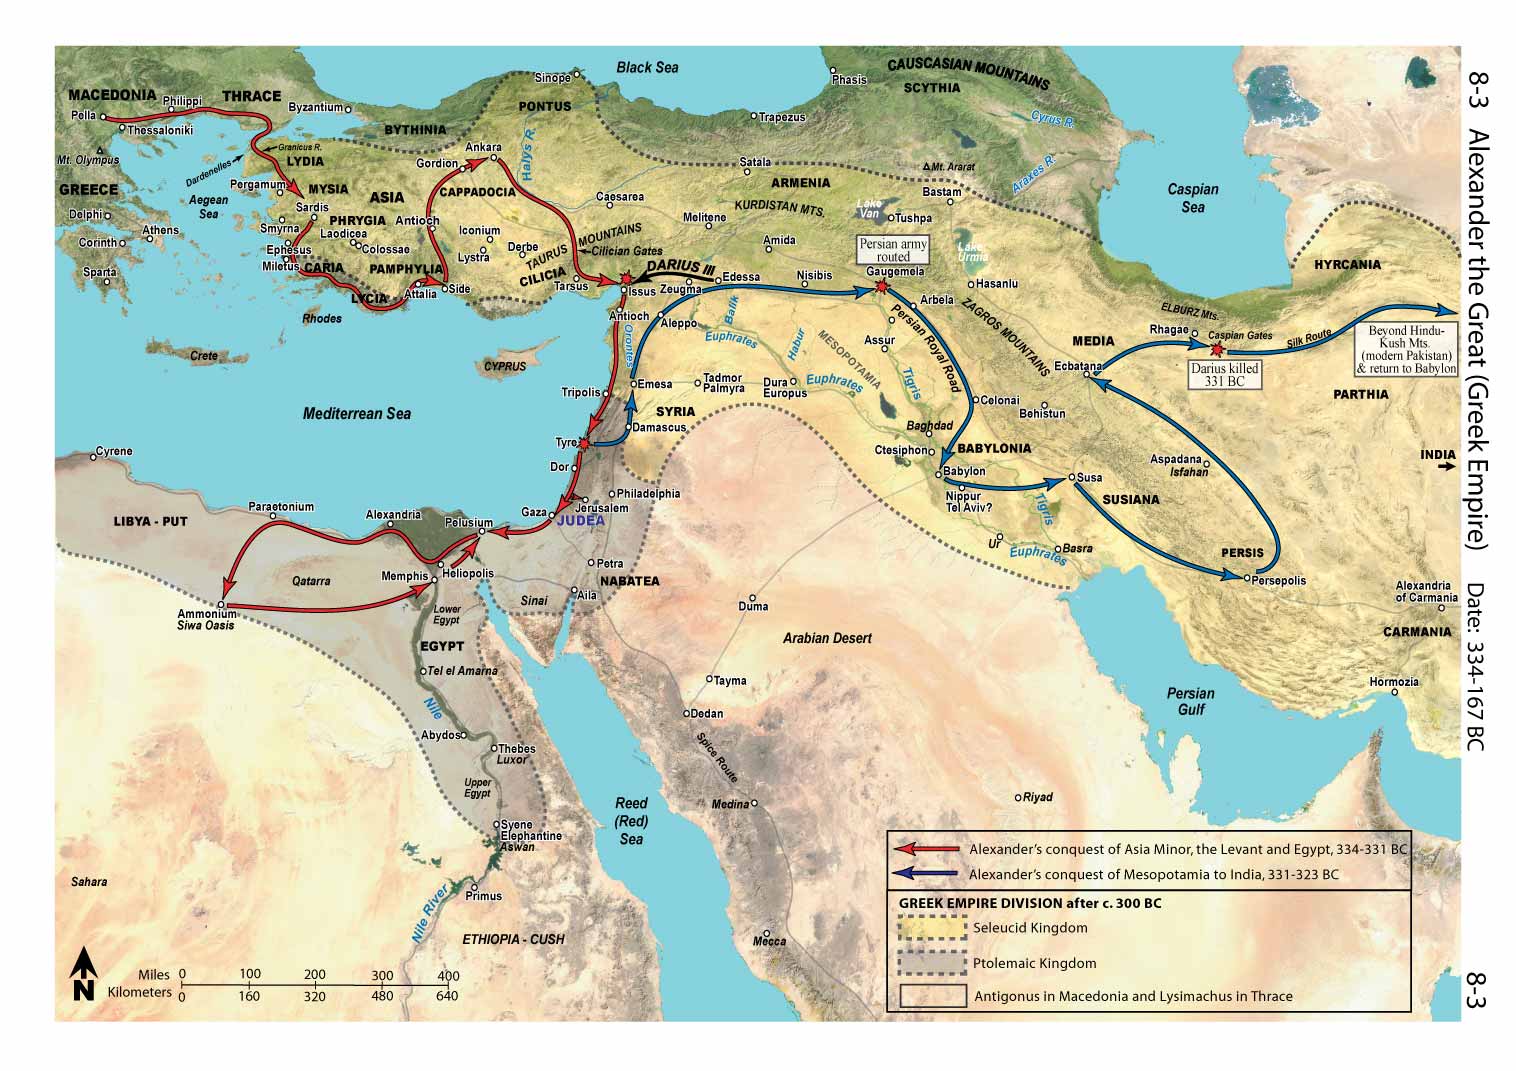 The Greek empire during the intertestamental period